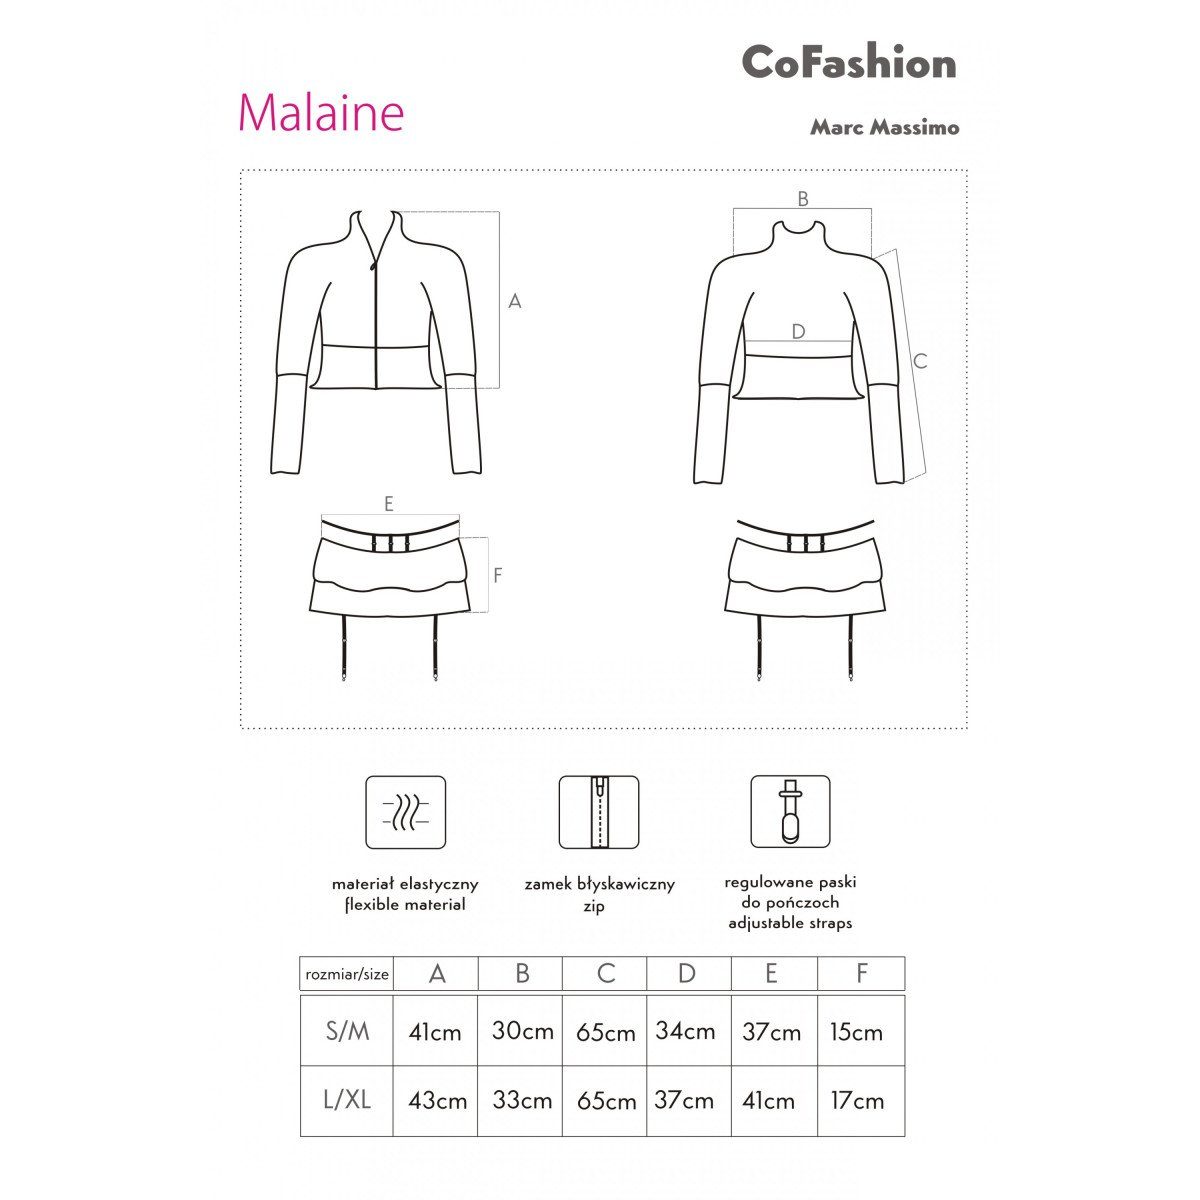 (L/XL,S/M) Schalen-BH Lingerie schwarz CF CoFashion Set Set: - Malaine